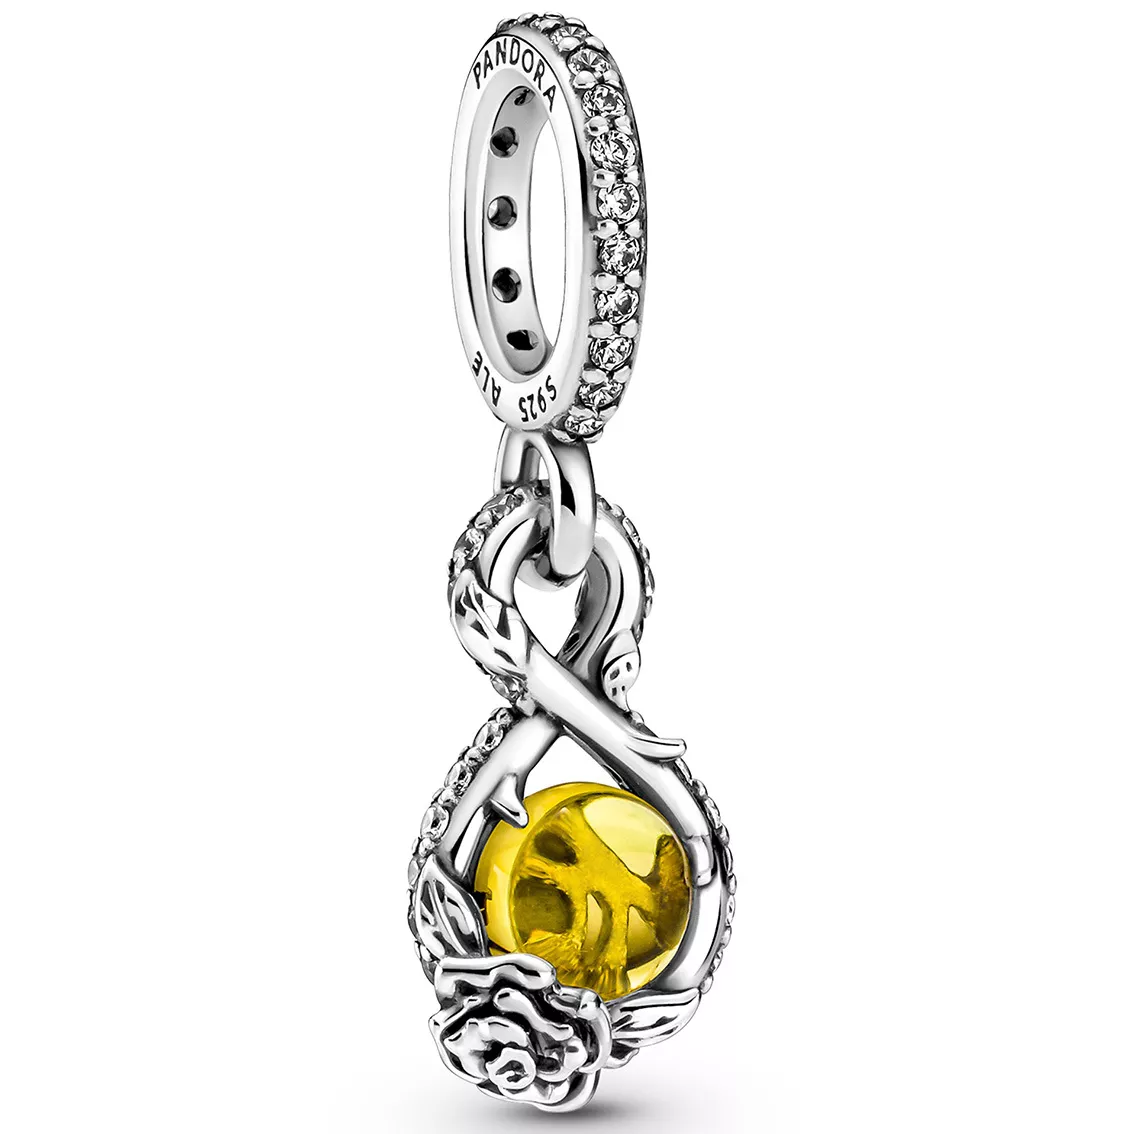 Pandora Disney 399525C01 Hangbedel Belle and The Beast Infity-Rose zilver-kristal geel